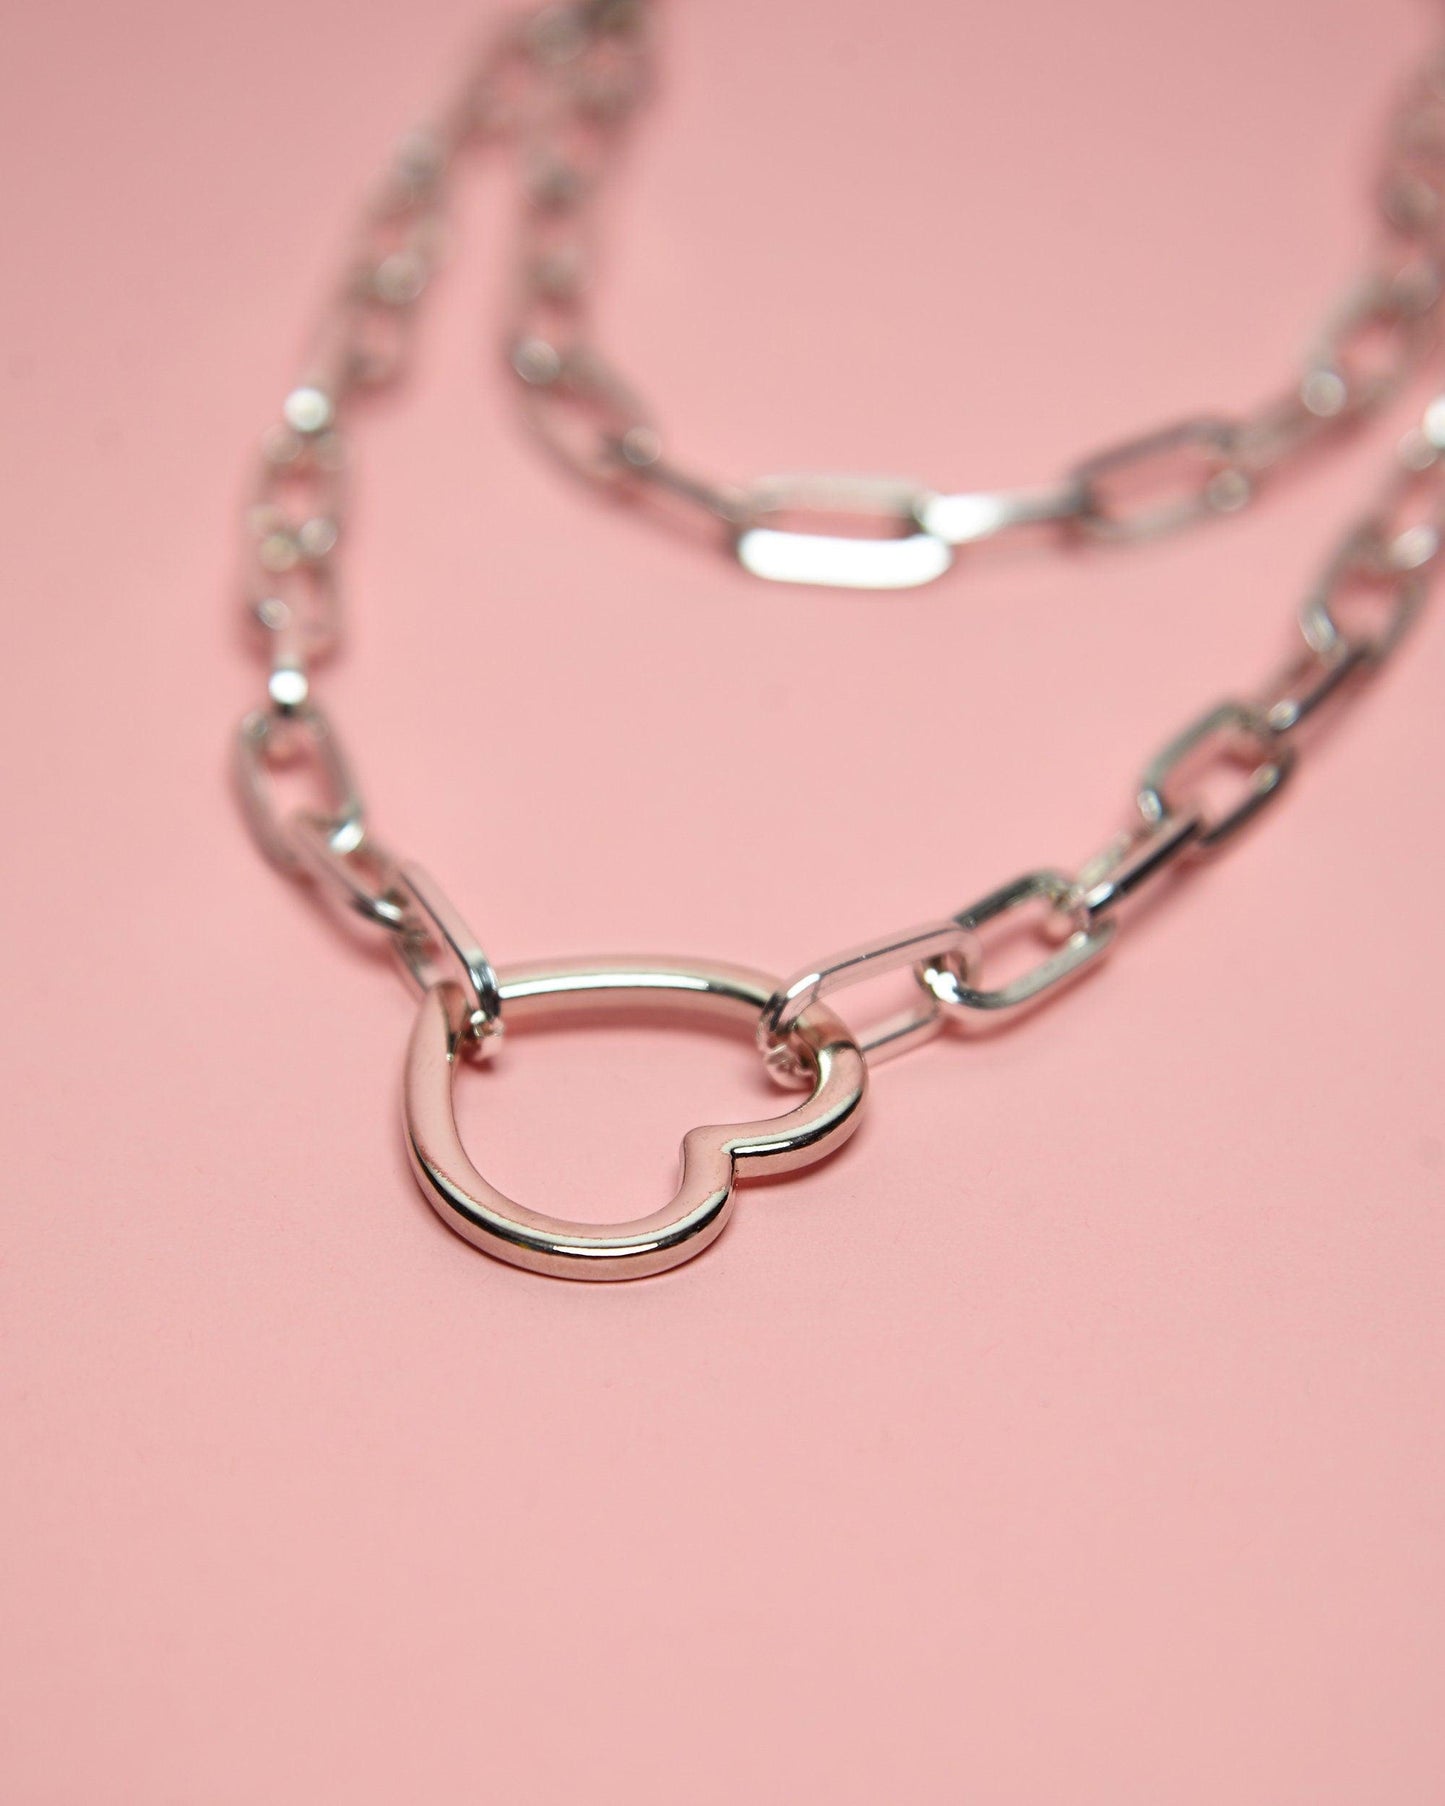 Every body say love... heart chain - aluminum chain.